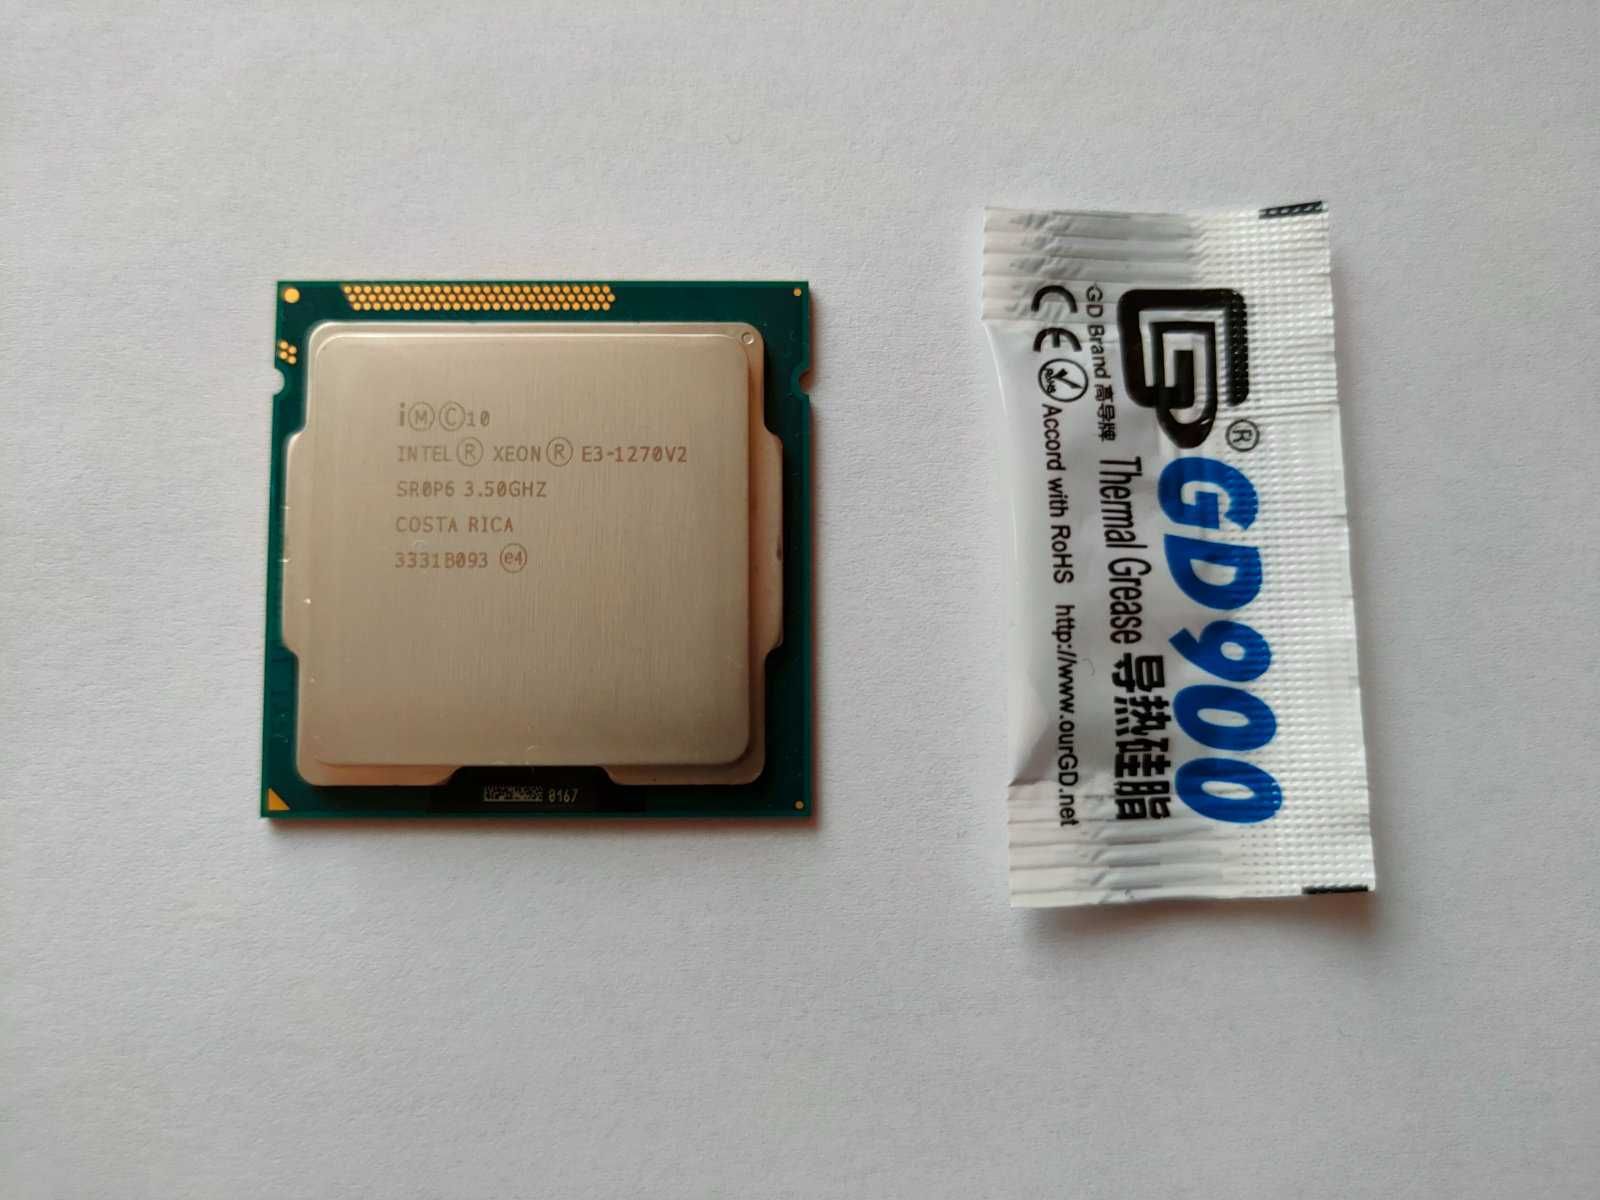 Intel Xeon E3-1270 v2 3.5-3.9 GHz 1155 (лучше i7-3770)  + термопаста